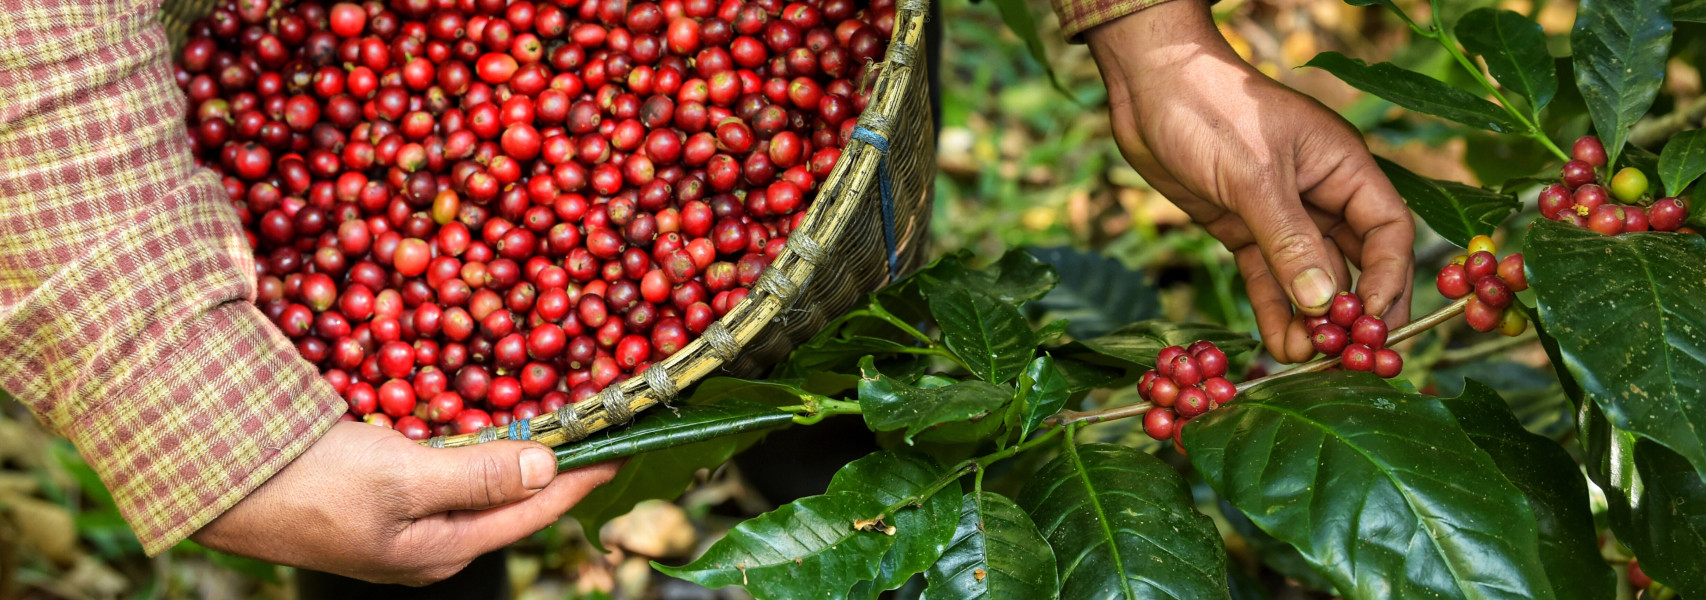 Café de la Olla: How to Prepare Traditional Mexican Coffee - banner image